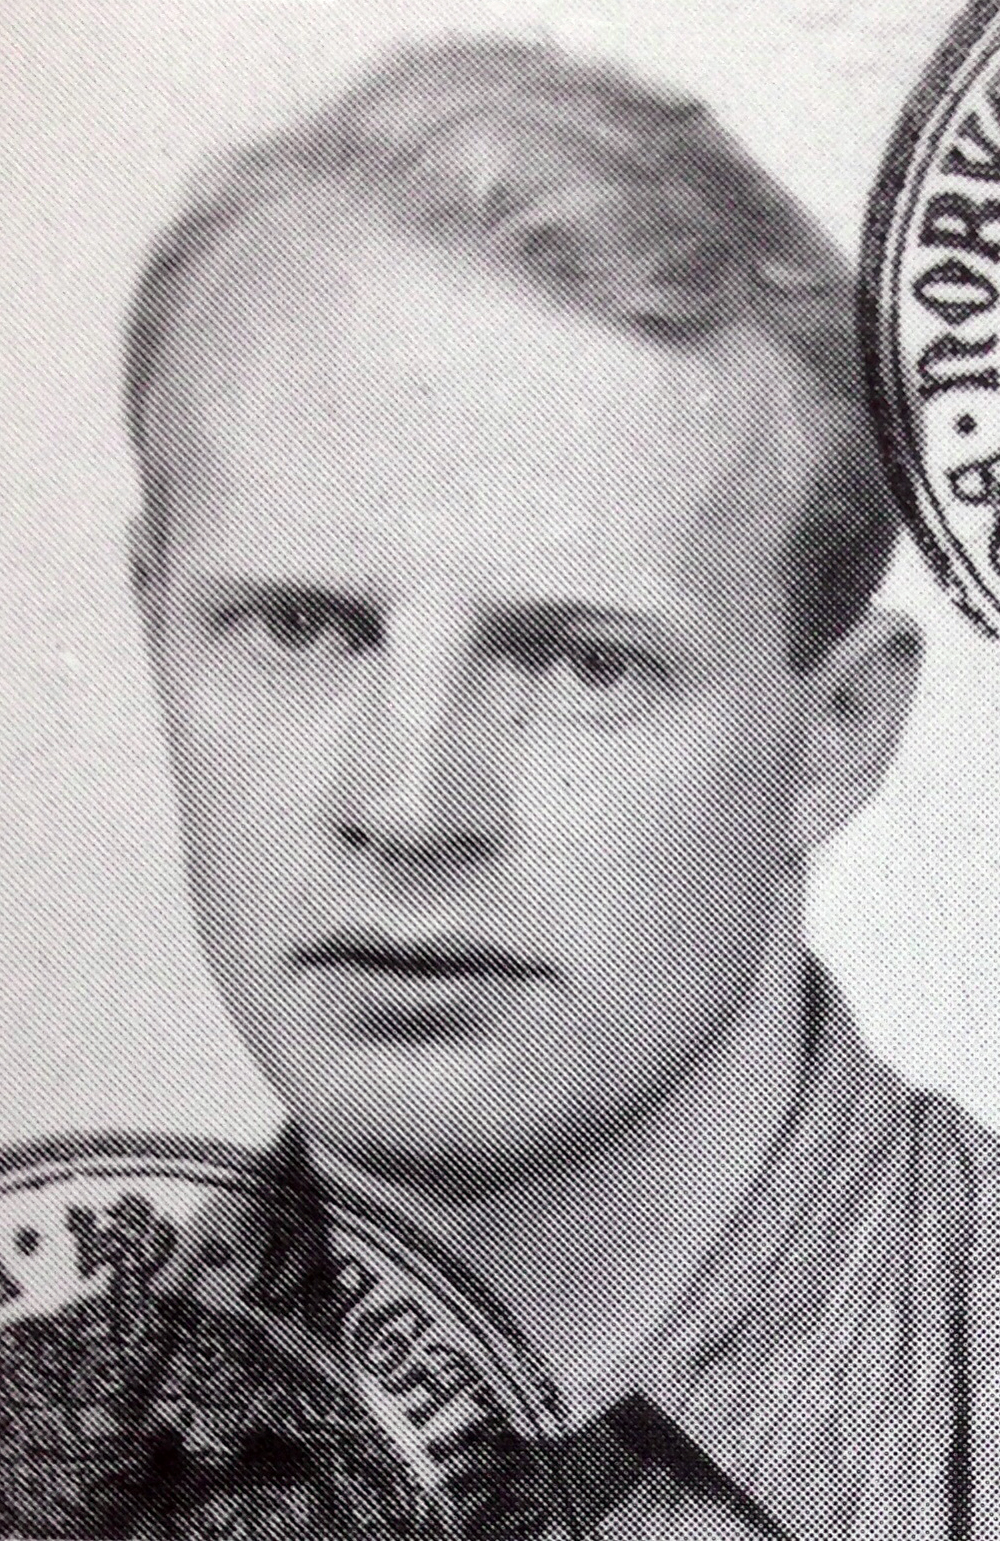 Arne Kjelstrup